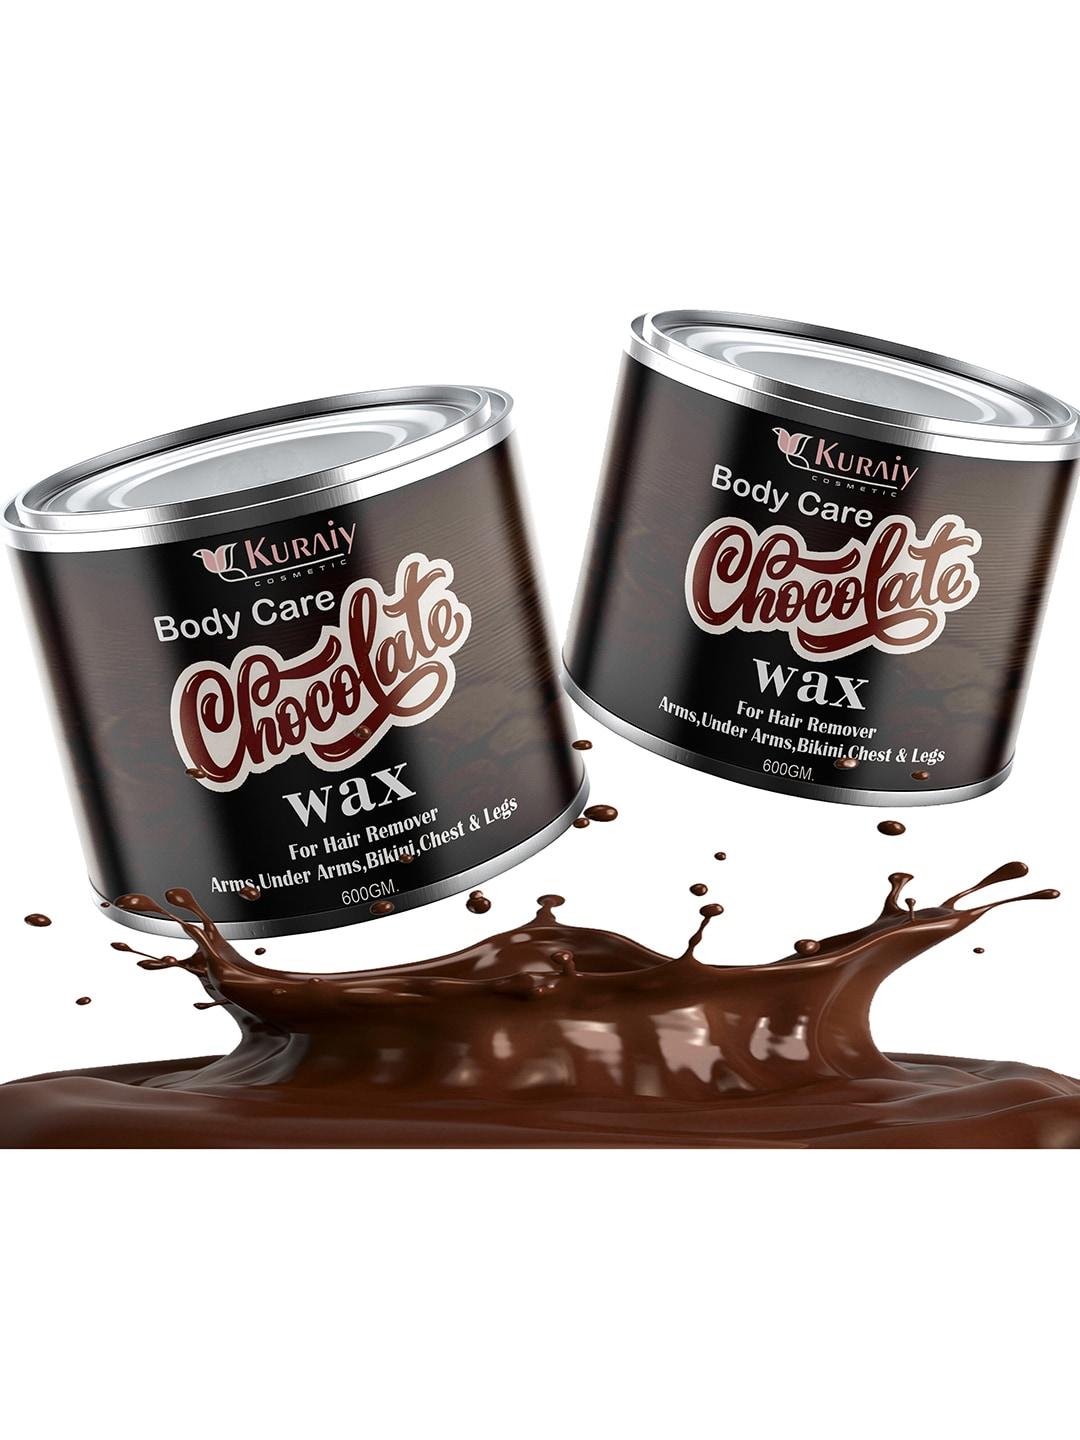 KURAIY Set of 2 Body Care Detan Chocolate Wax for Body Hair Removal - 600 g Each